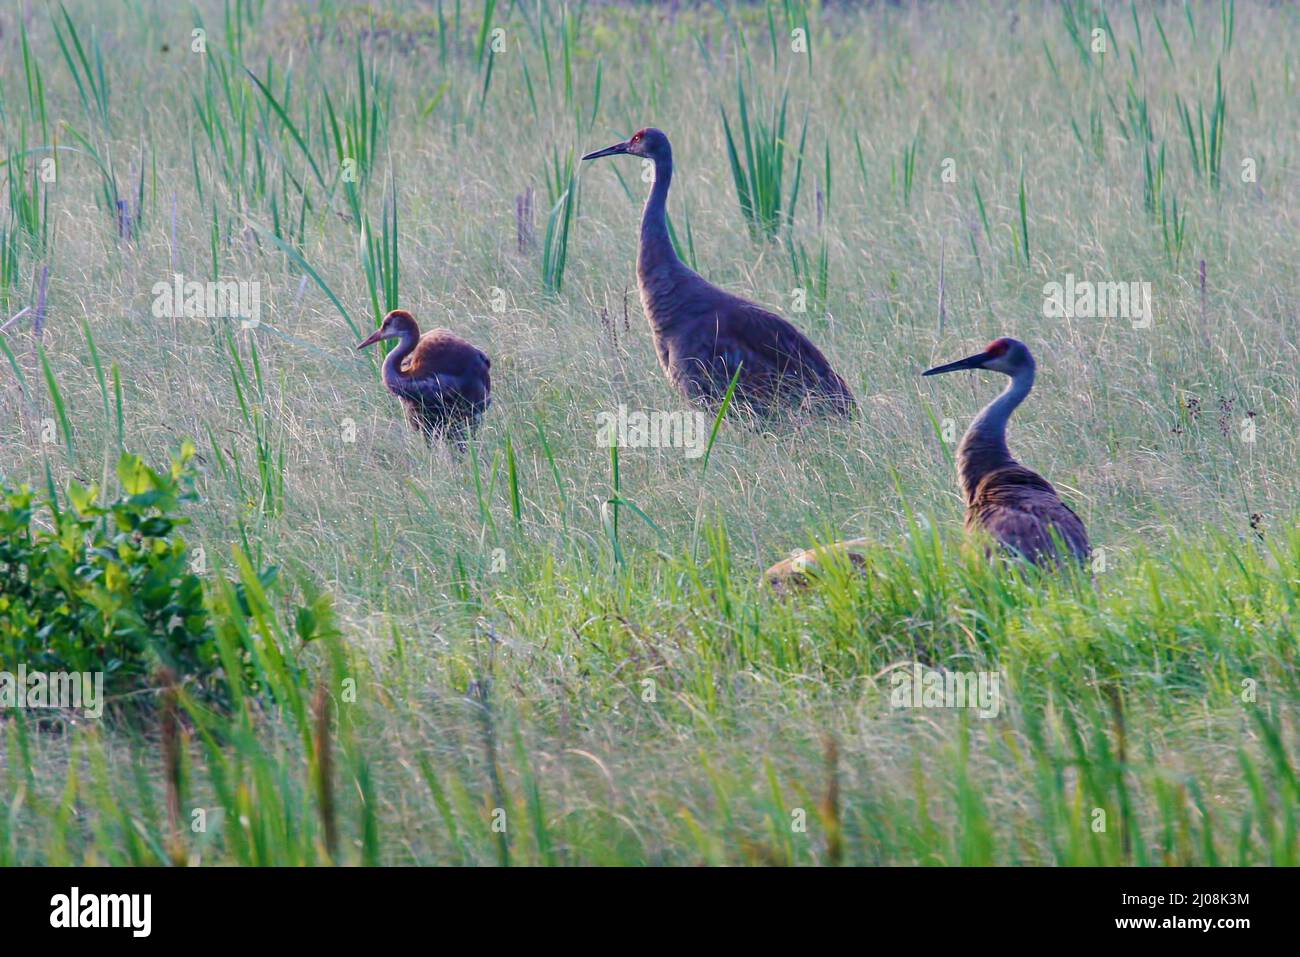 A Sandhill Crane family, Grus canadensis, in a sea of grass Stock Photo